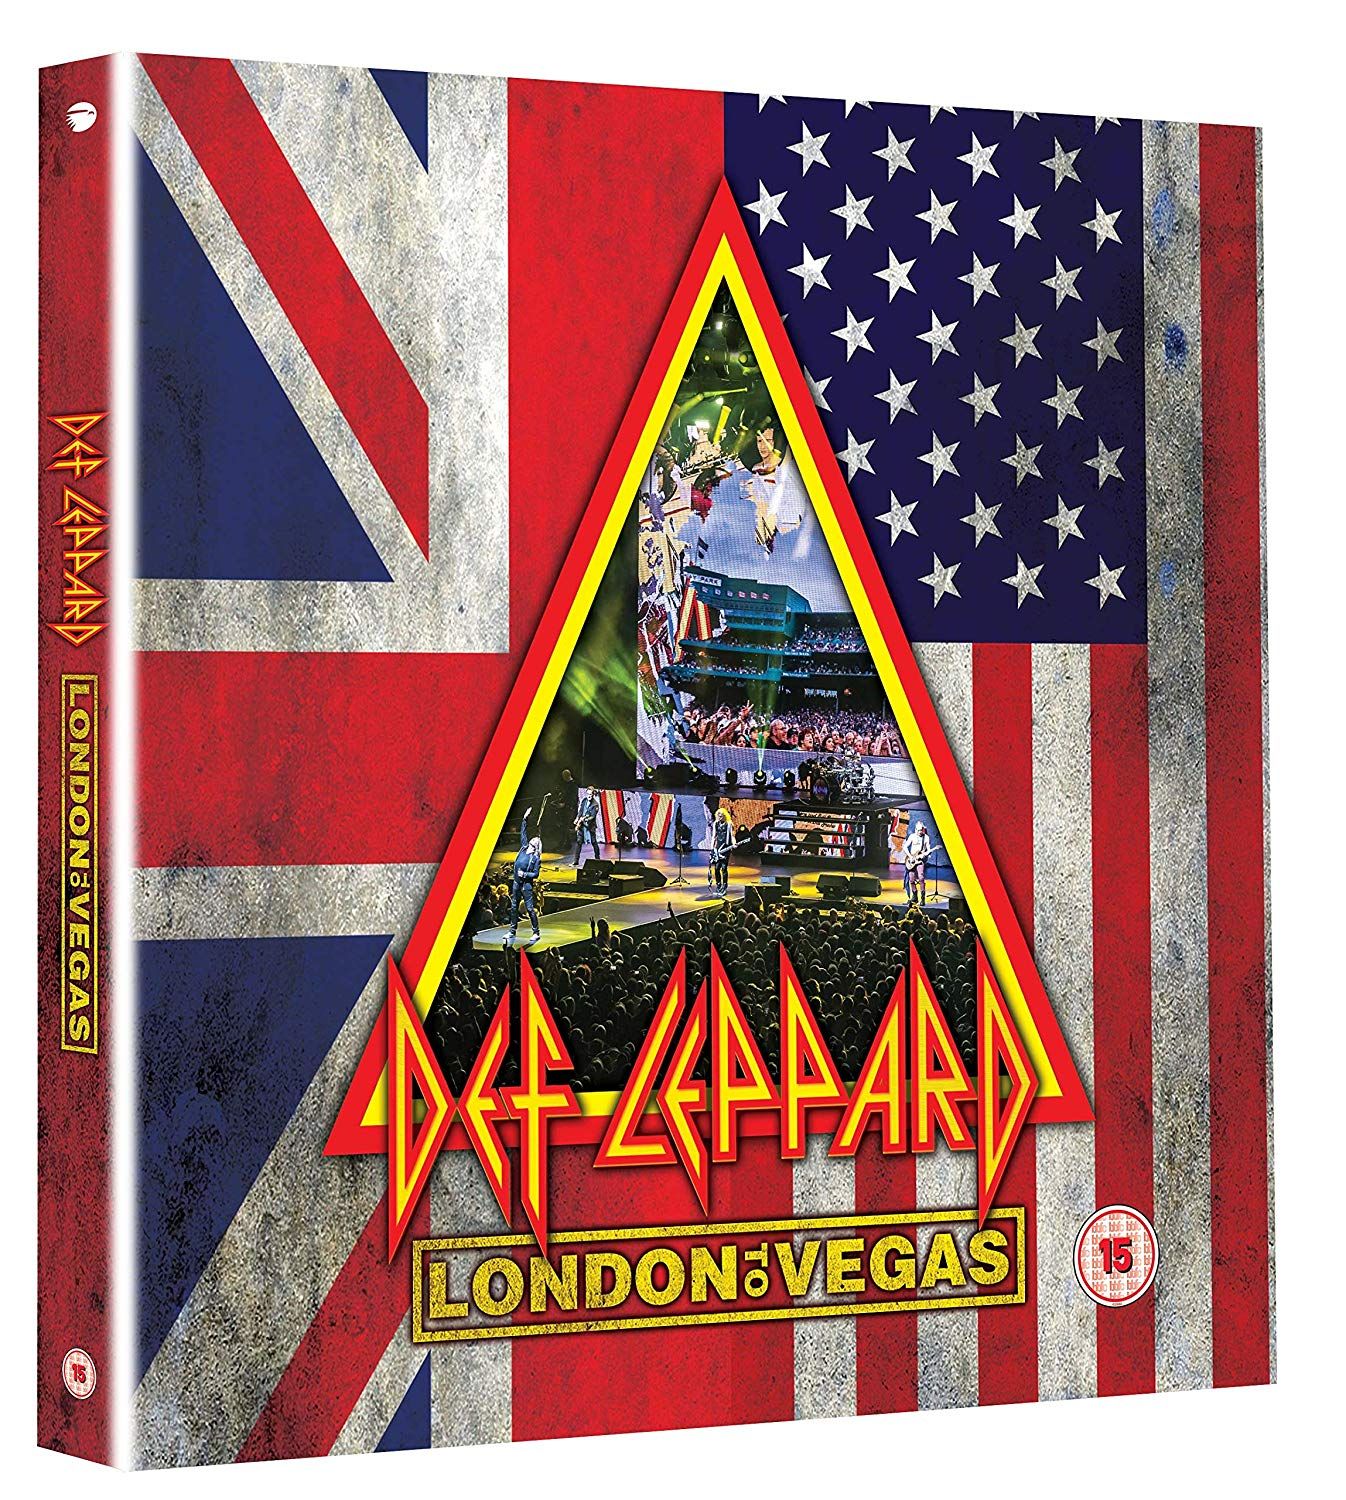 "London To Vegas"-DVD/Blu-ray erscheint im April